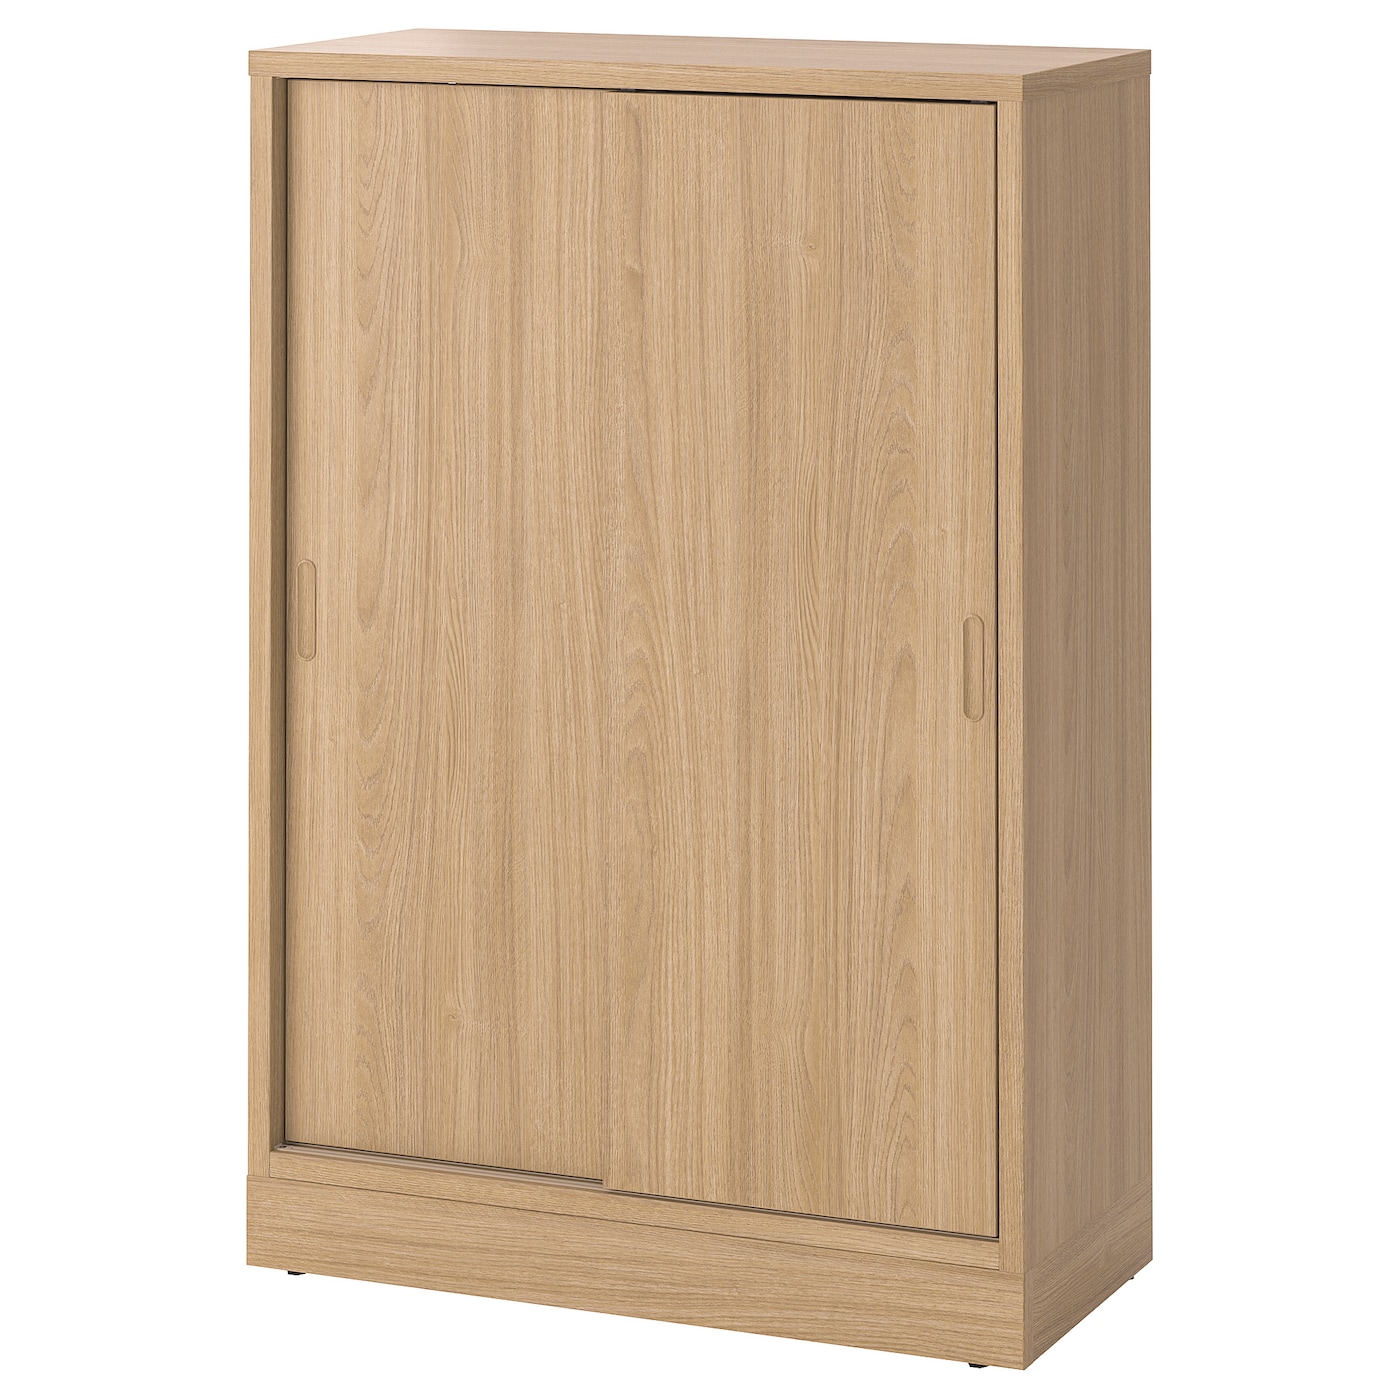 Шкаф - TONSTAD  IKEA/ ТОНСТАД  ИКЕА, 120х82 см, под беленый дуб